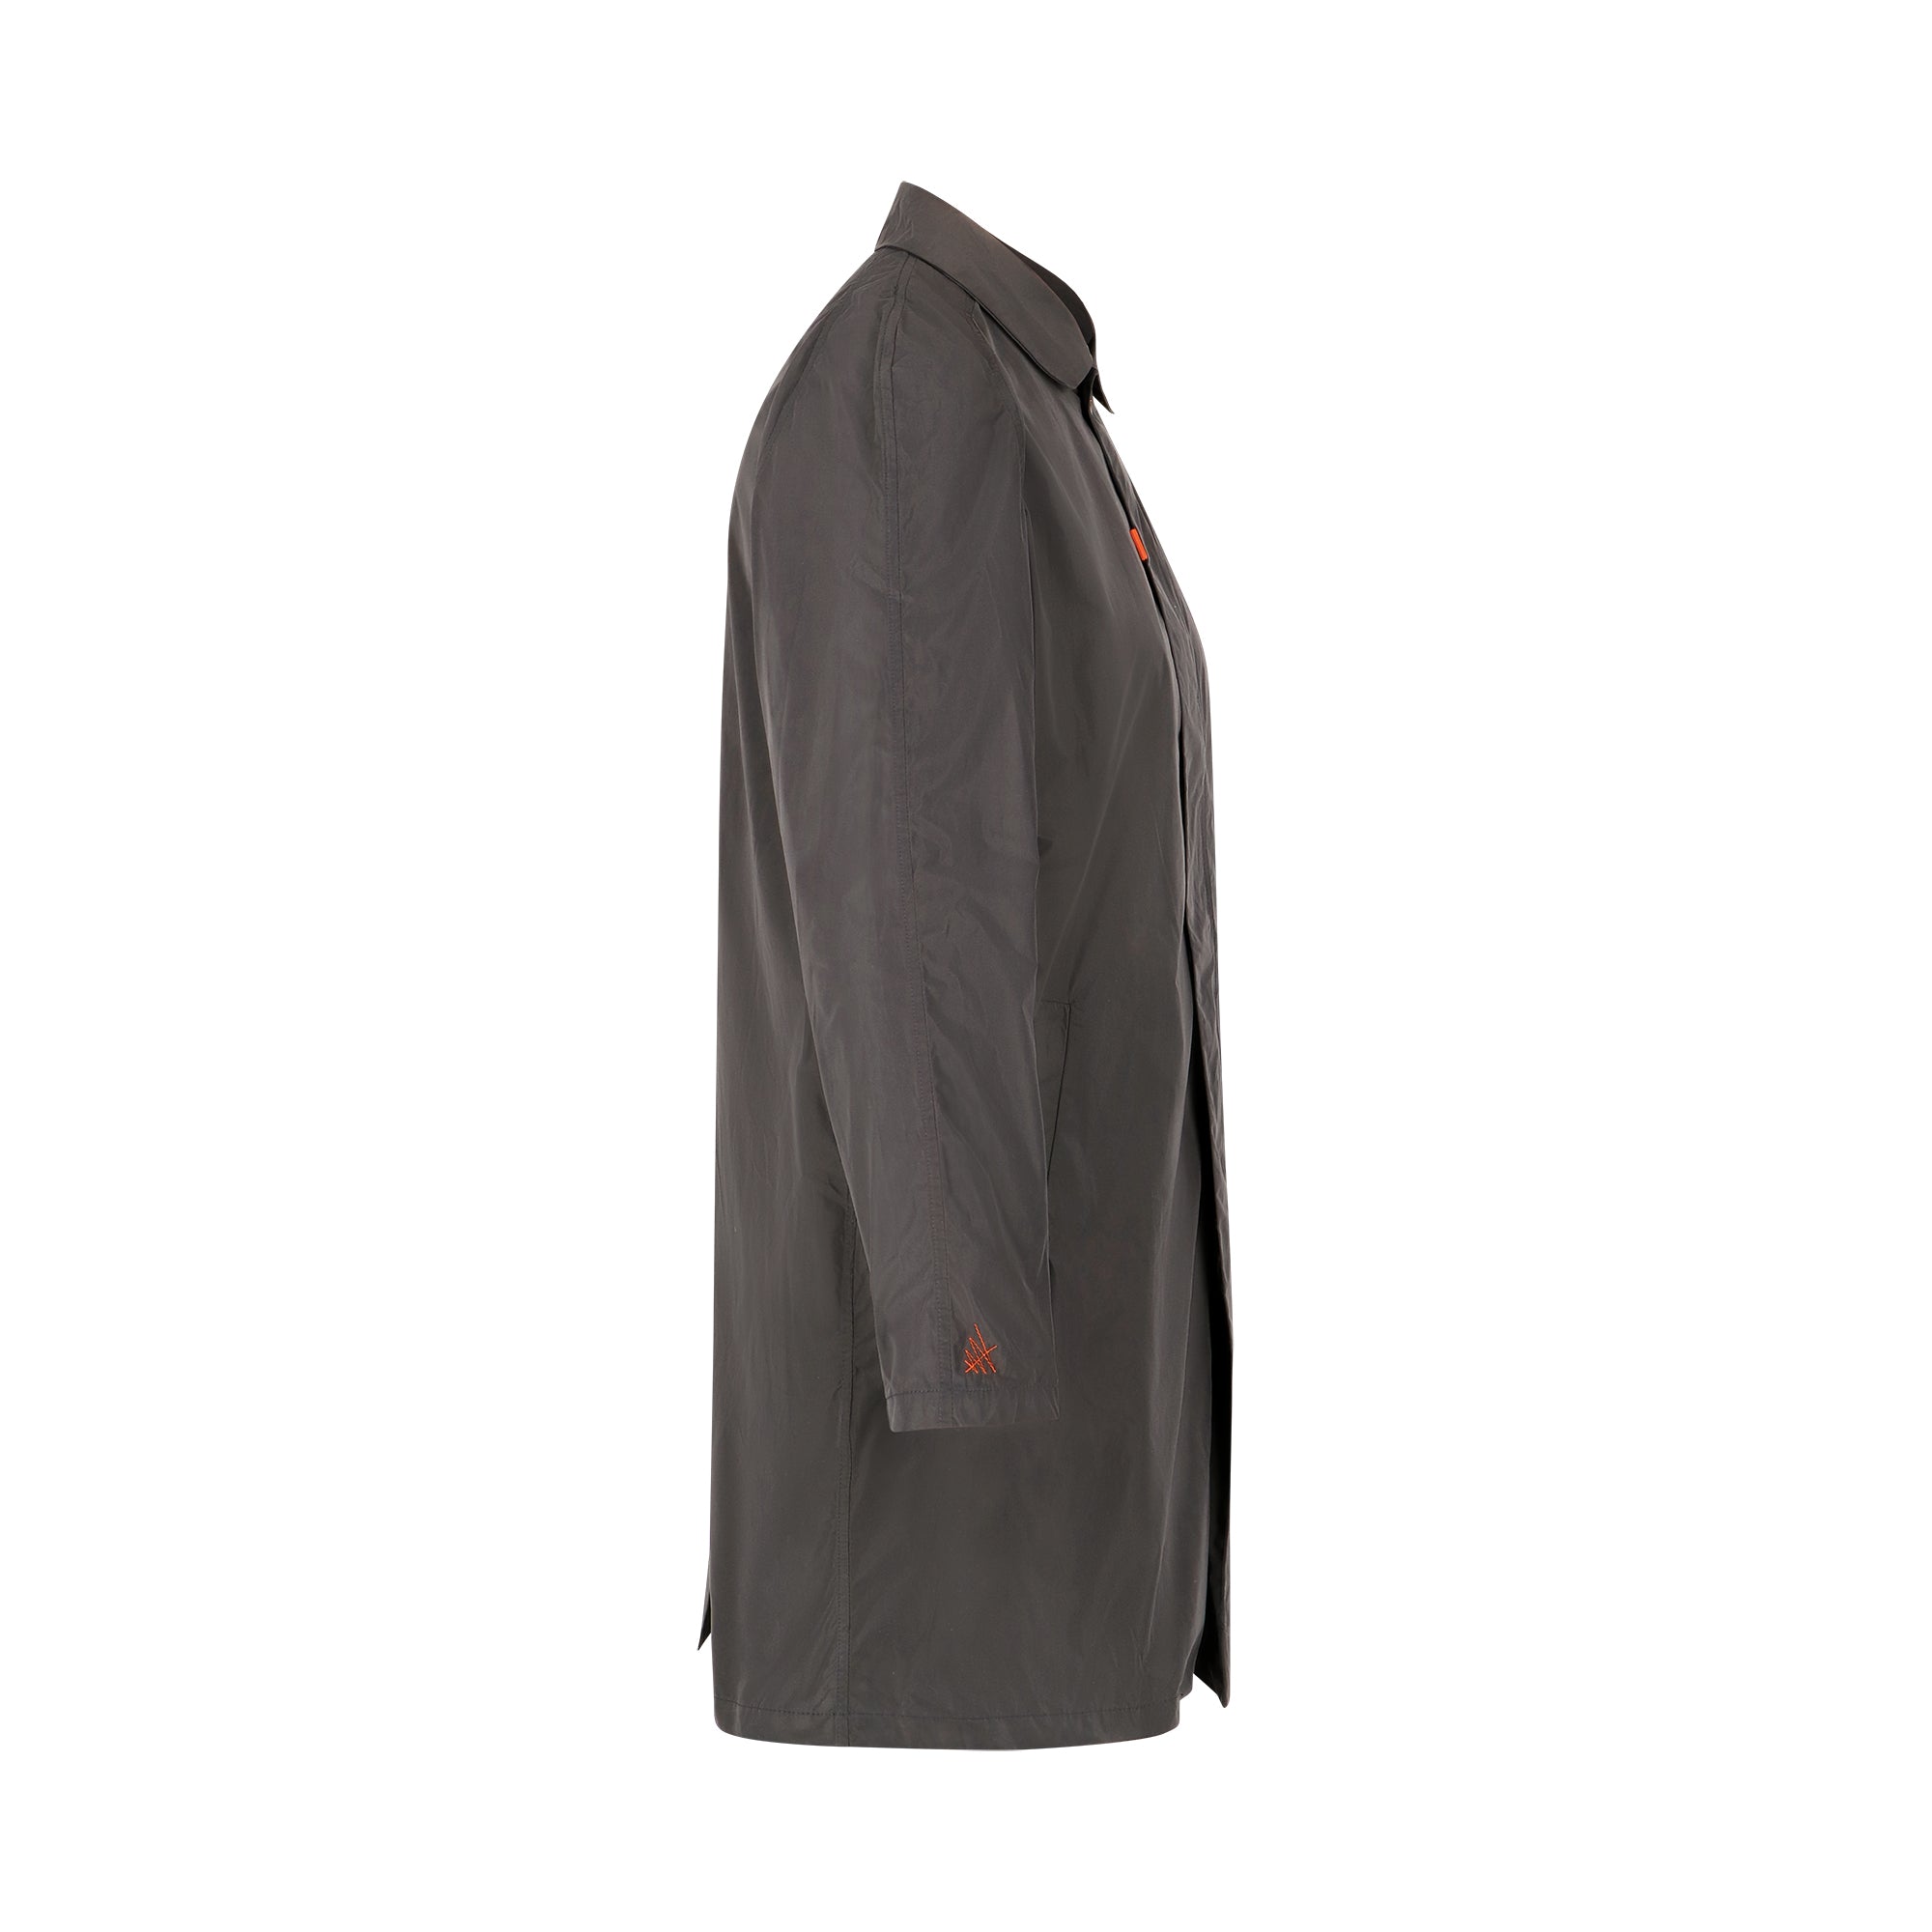 Strato men's raincoat - dark grey color - side view